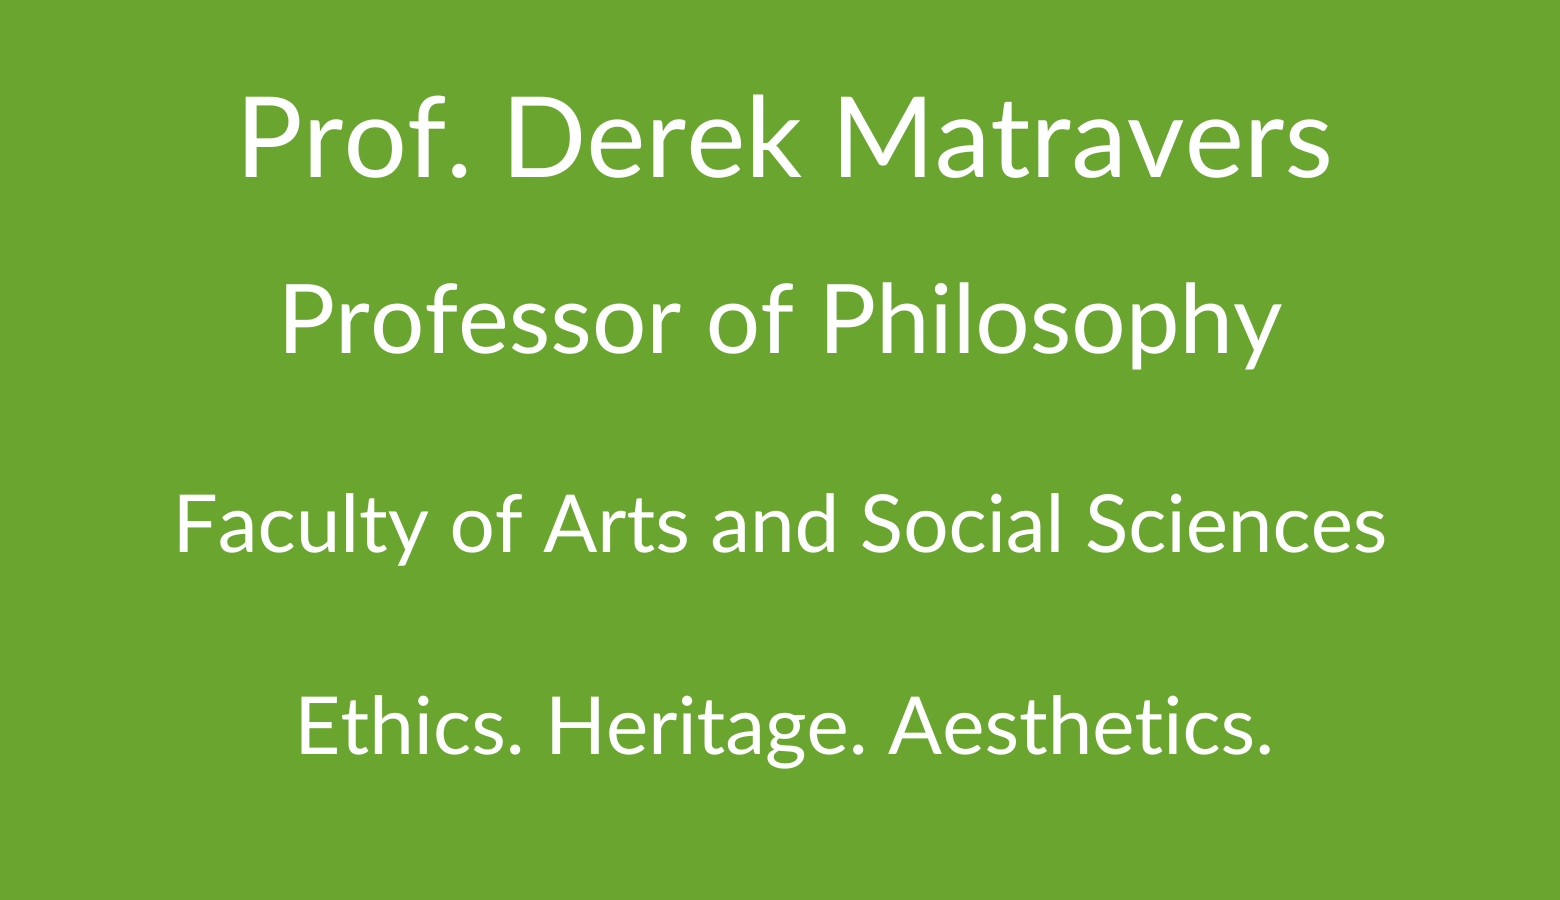 Prof. Derek Matravers. Professor of Philosophy. Faculty of Arts and Social Sciences. Ethics. Heritage. Aesthetics.